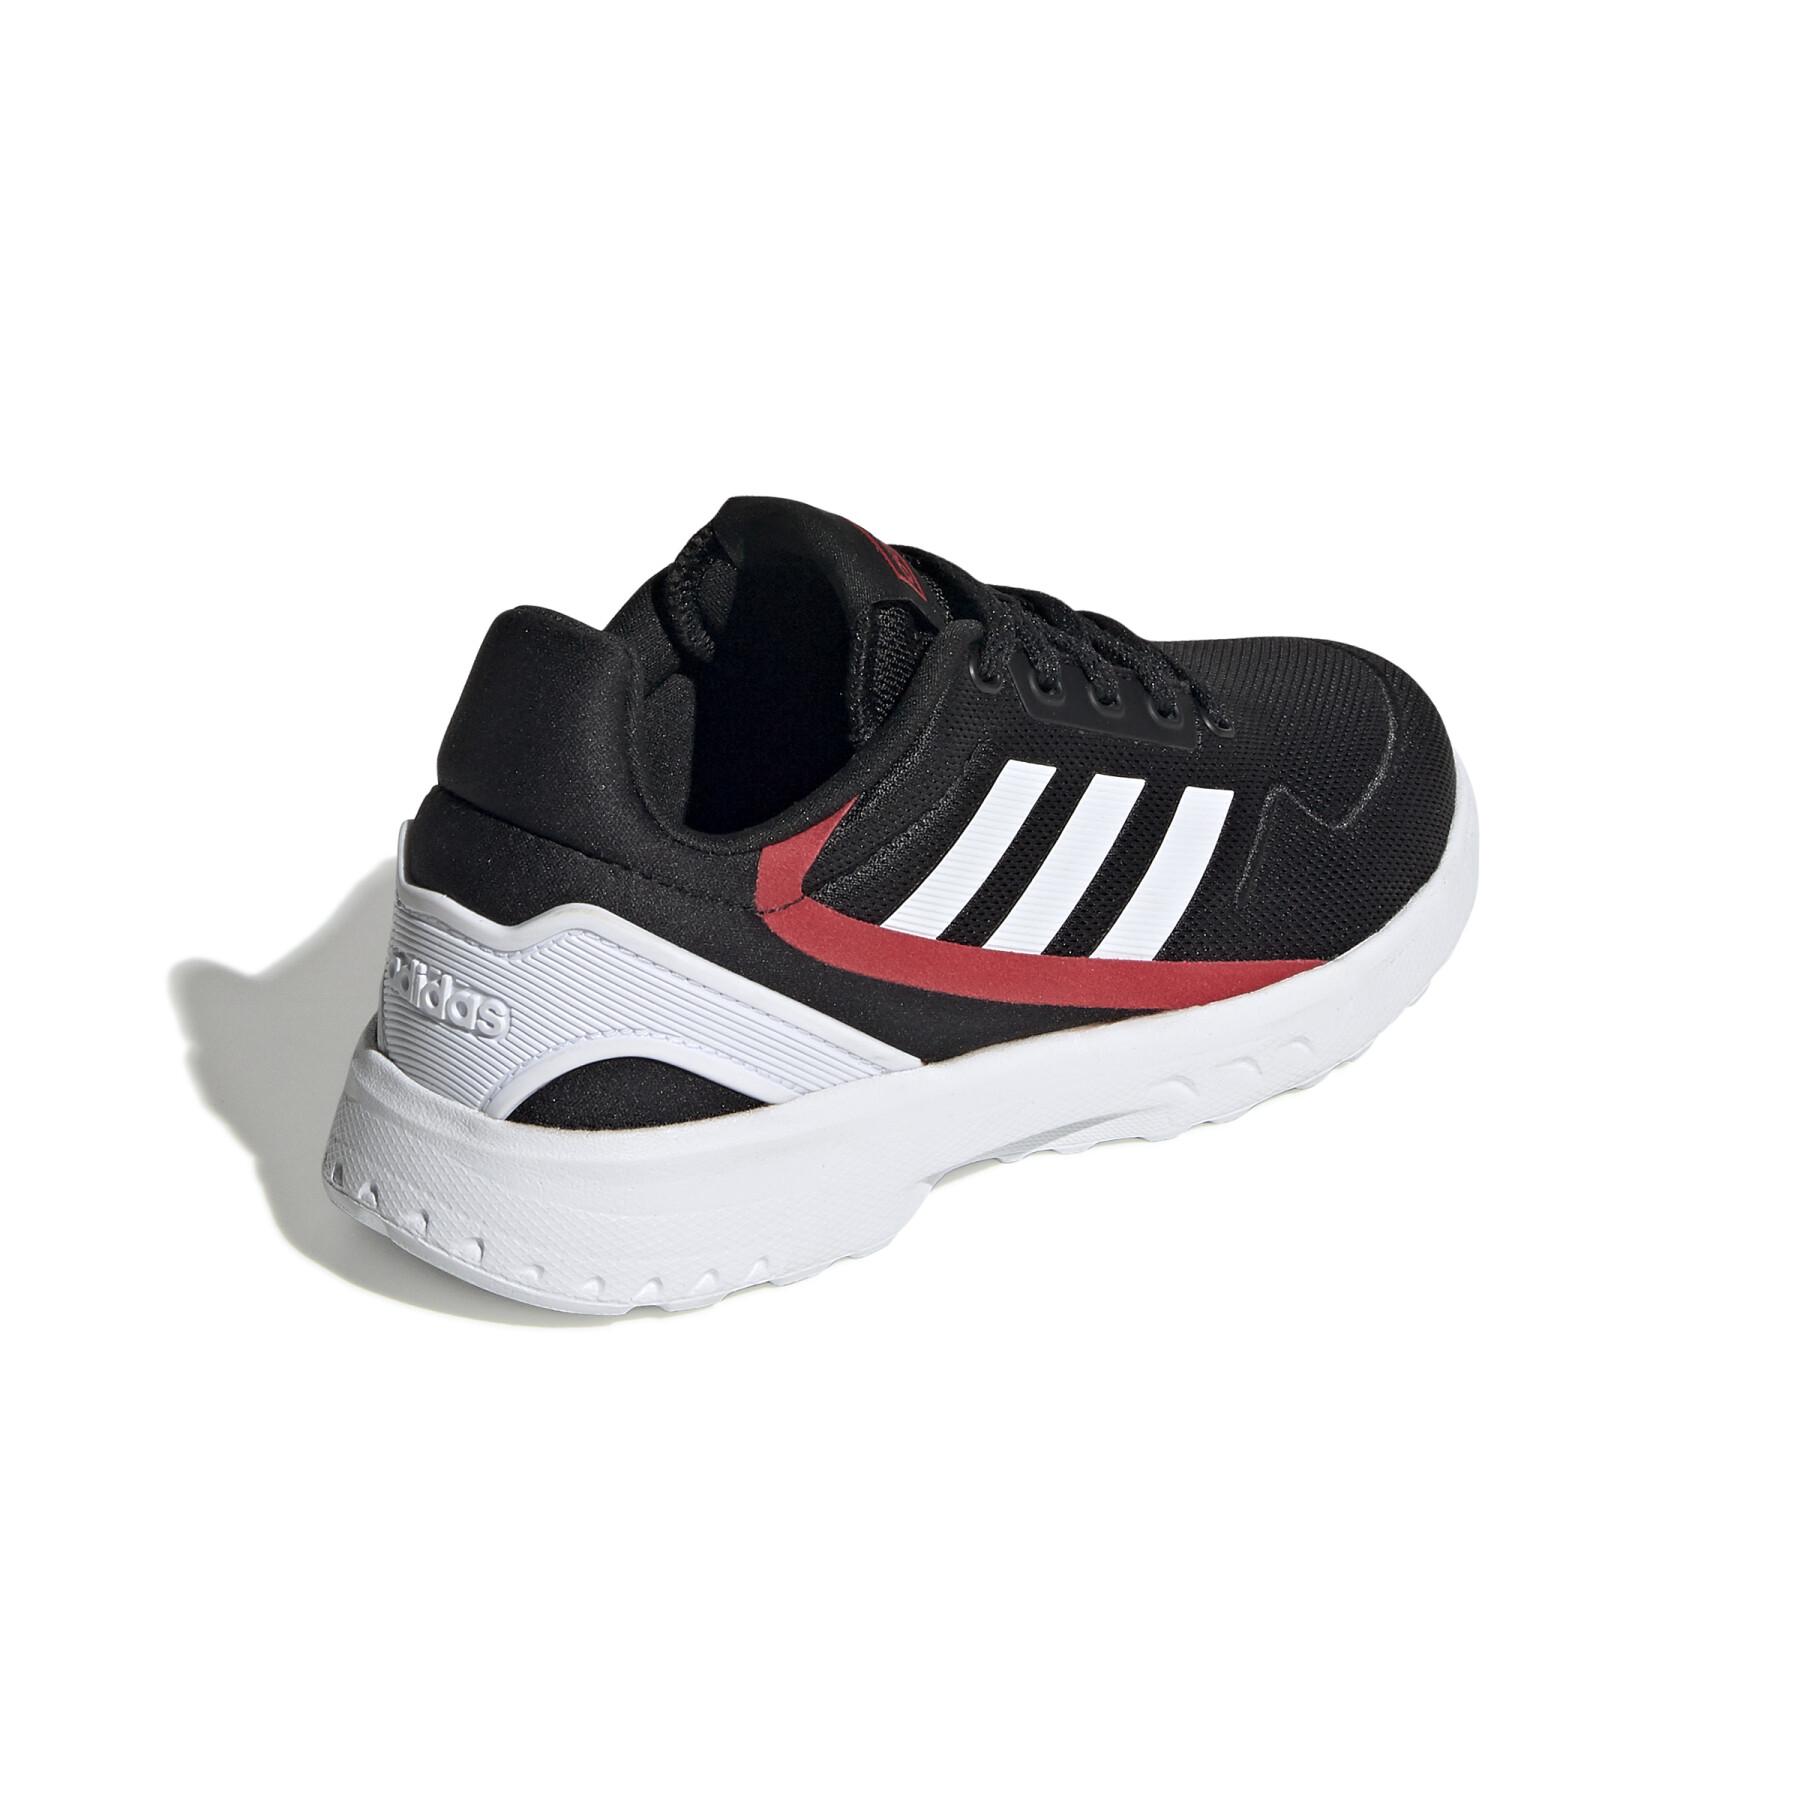 Chaussures de running enfant adidas Nebula Ted